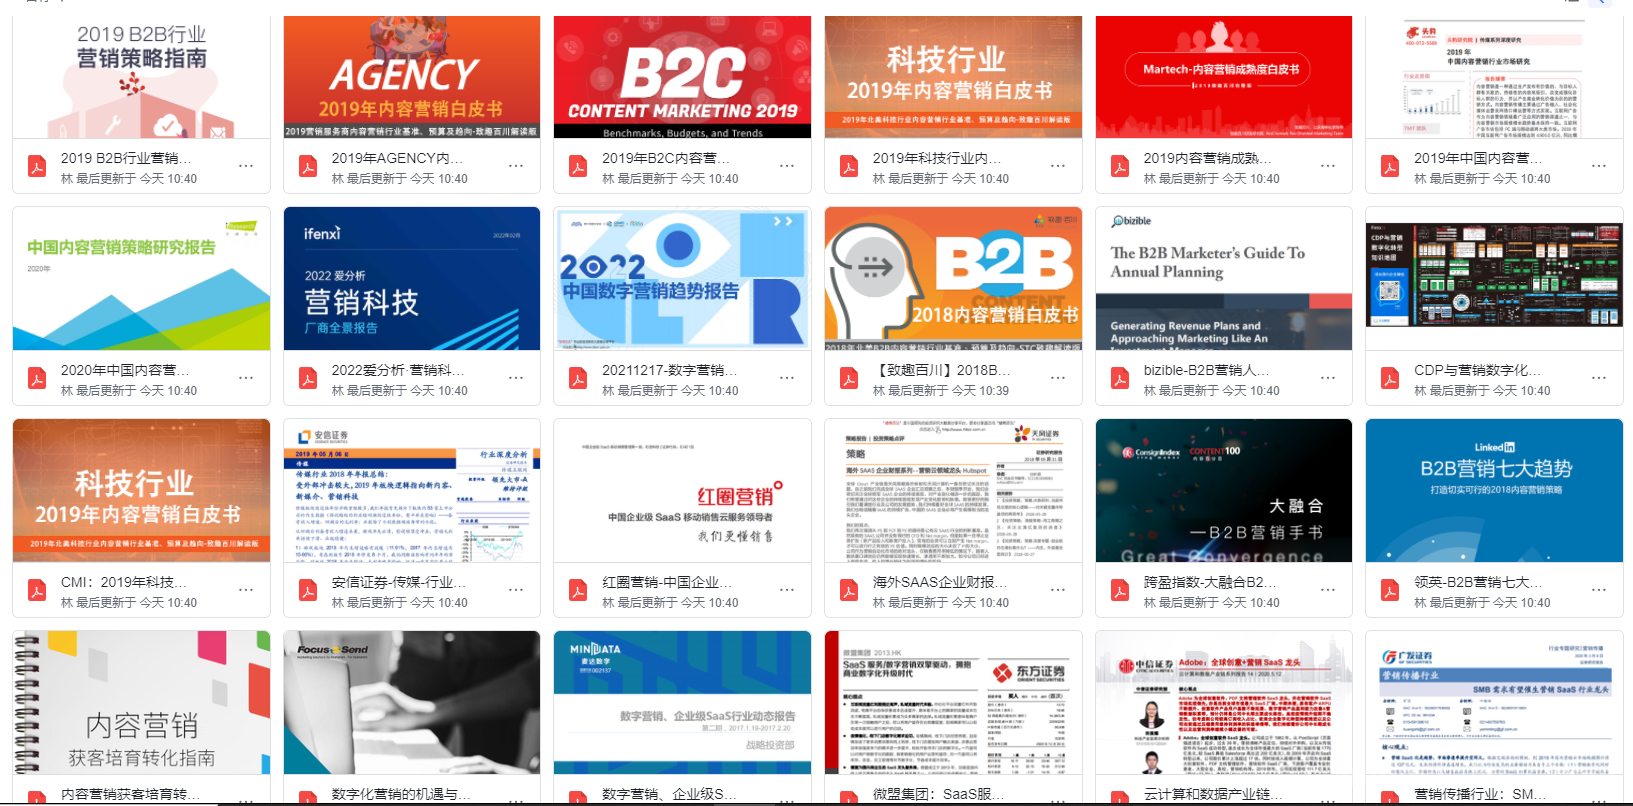 【SaaS资料】B2B营销领域报告汇总27份打包下载.rar